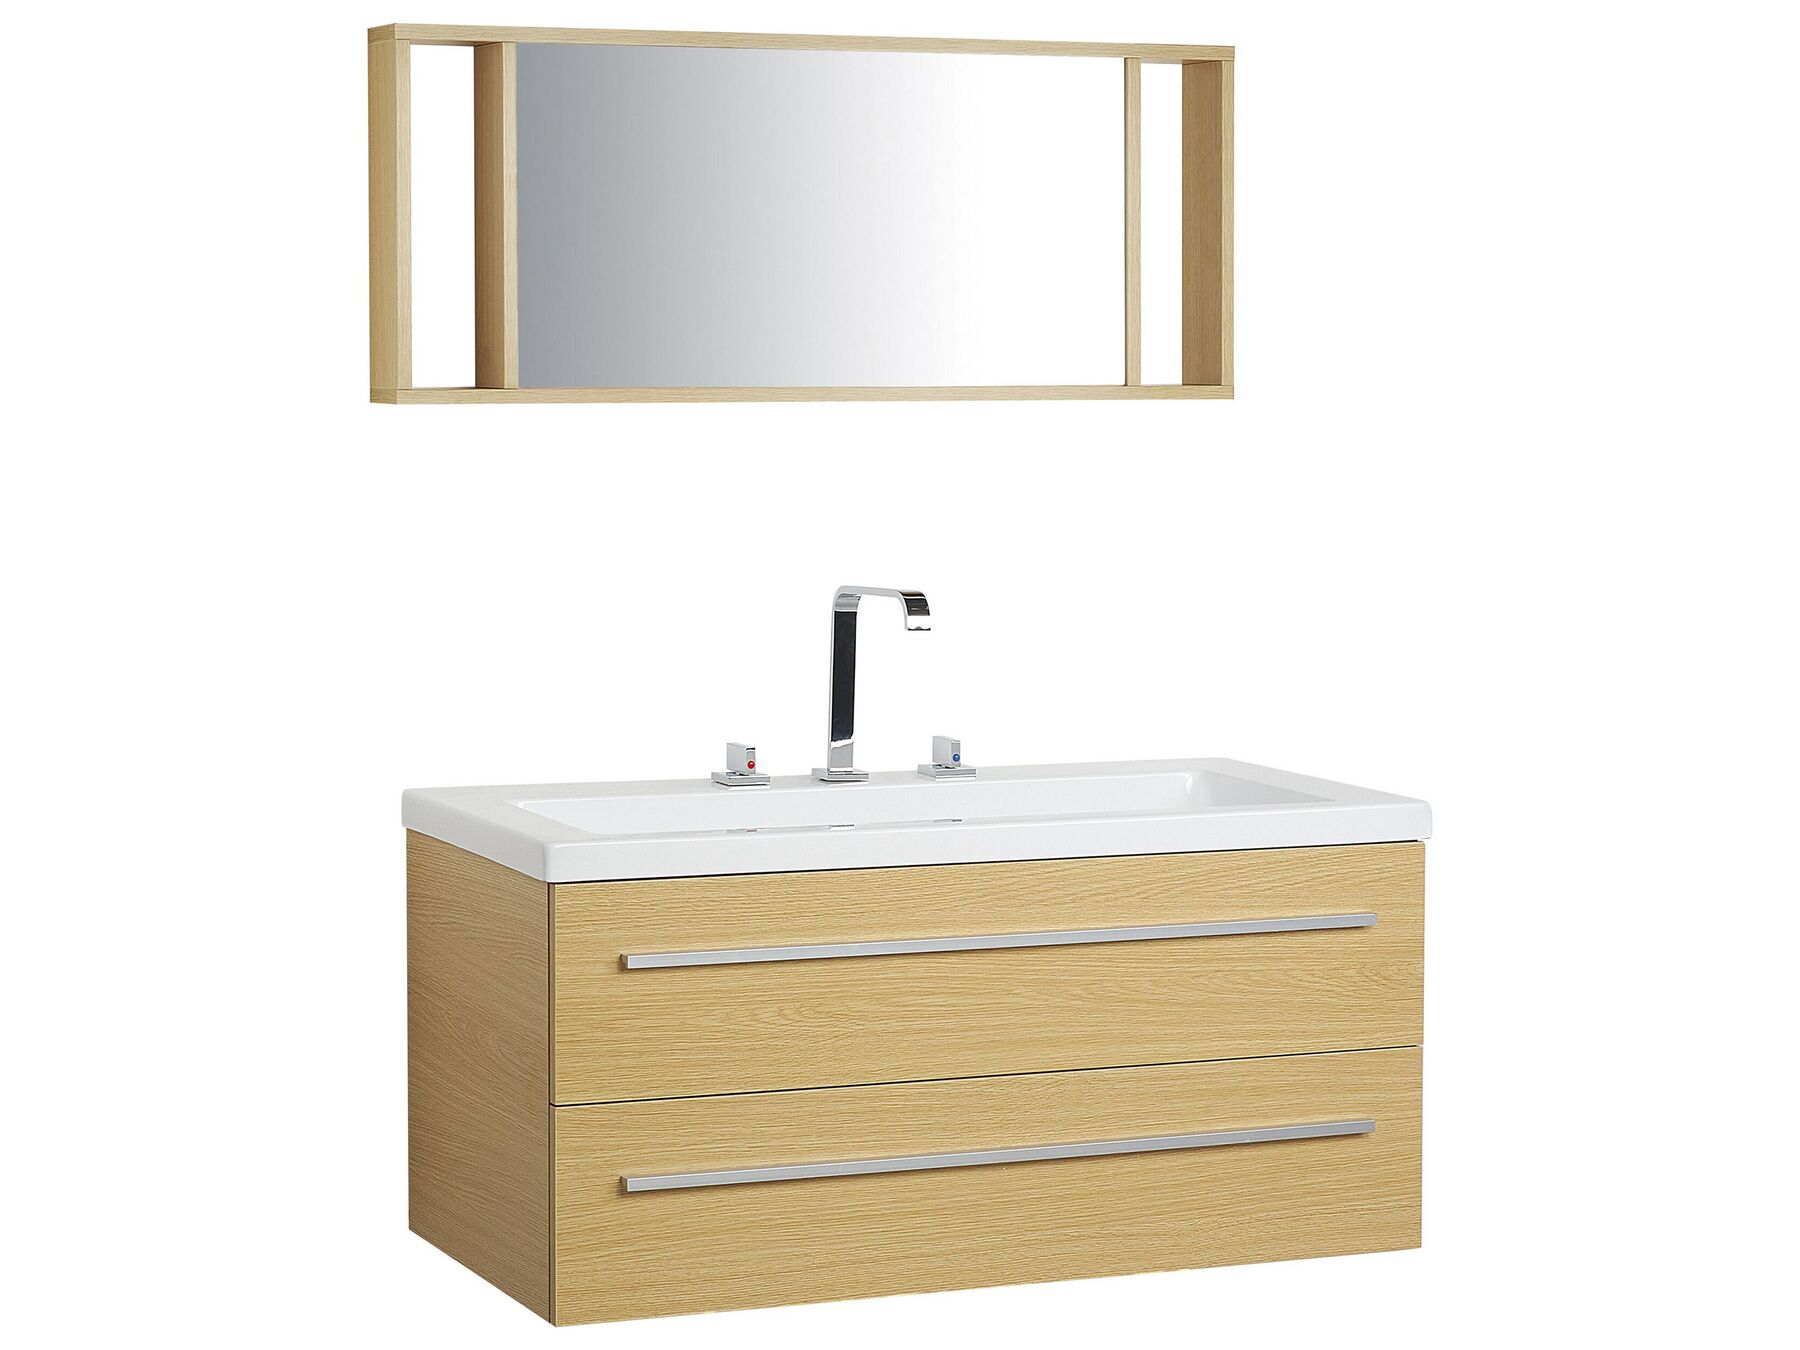 Bathroom furniture bathroom set hanging cabinet sink mirror in trendy beige Almeria-